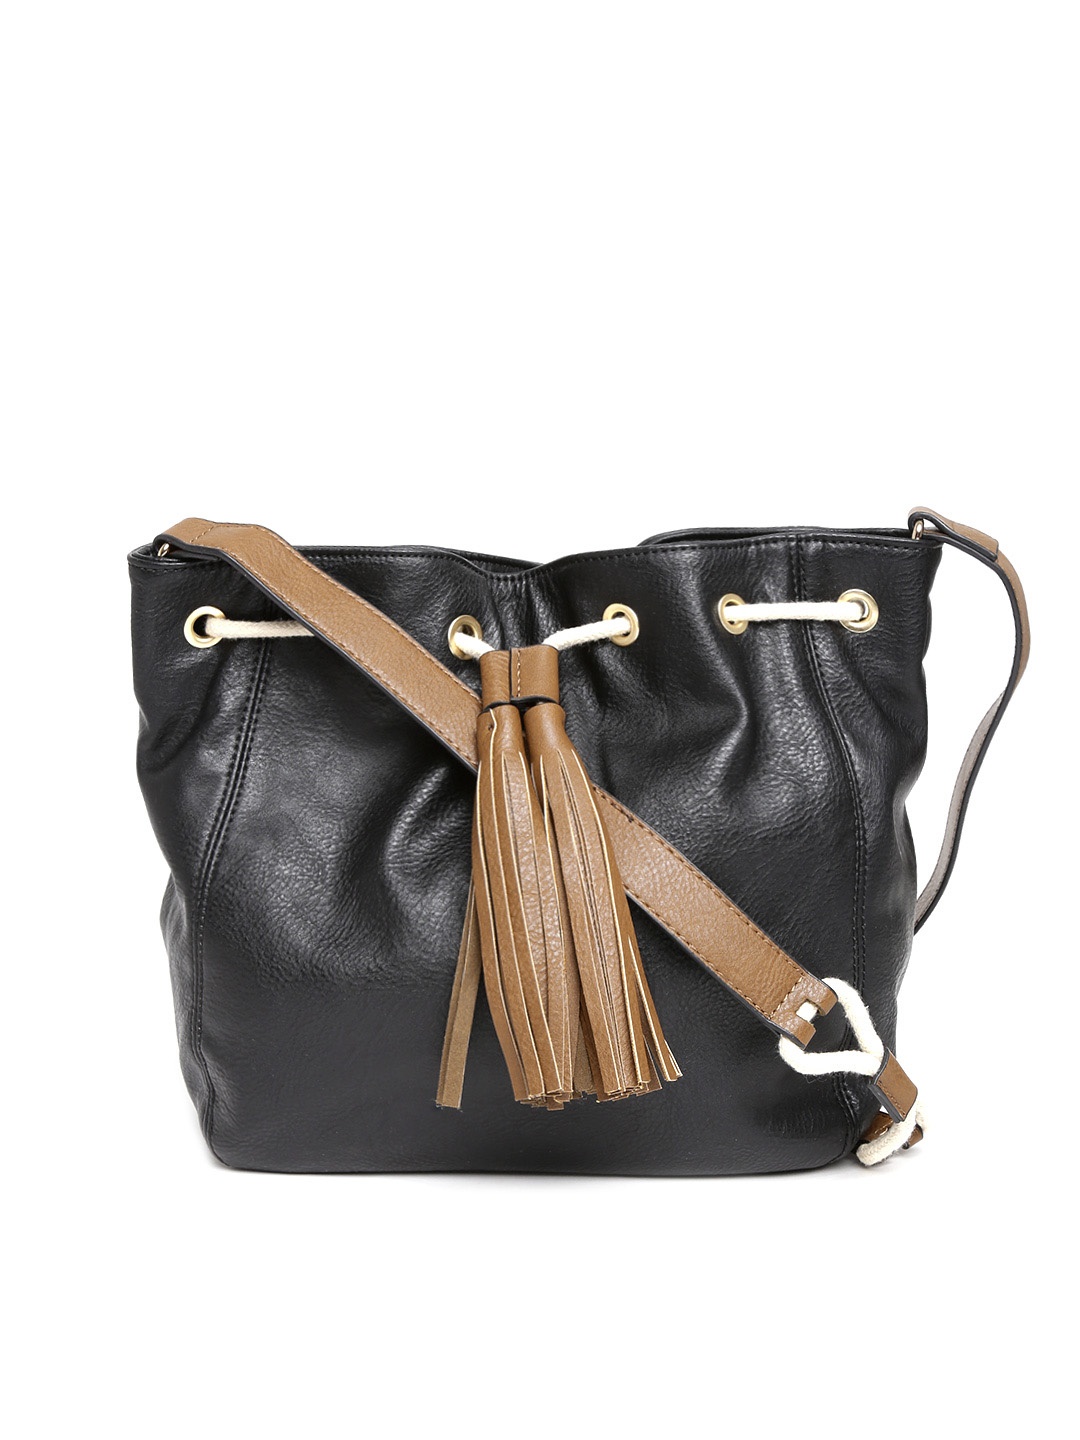 Home Accessories Women Accessories Handbags Parfois Handbags